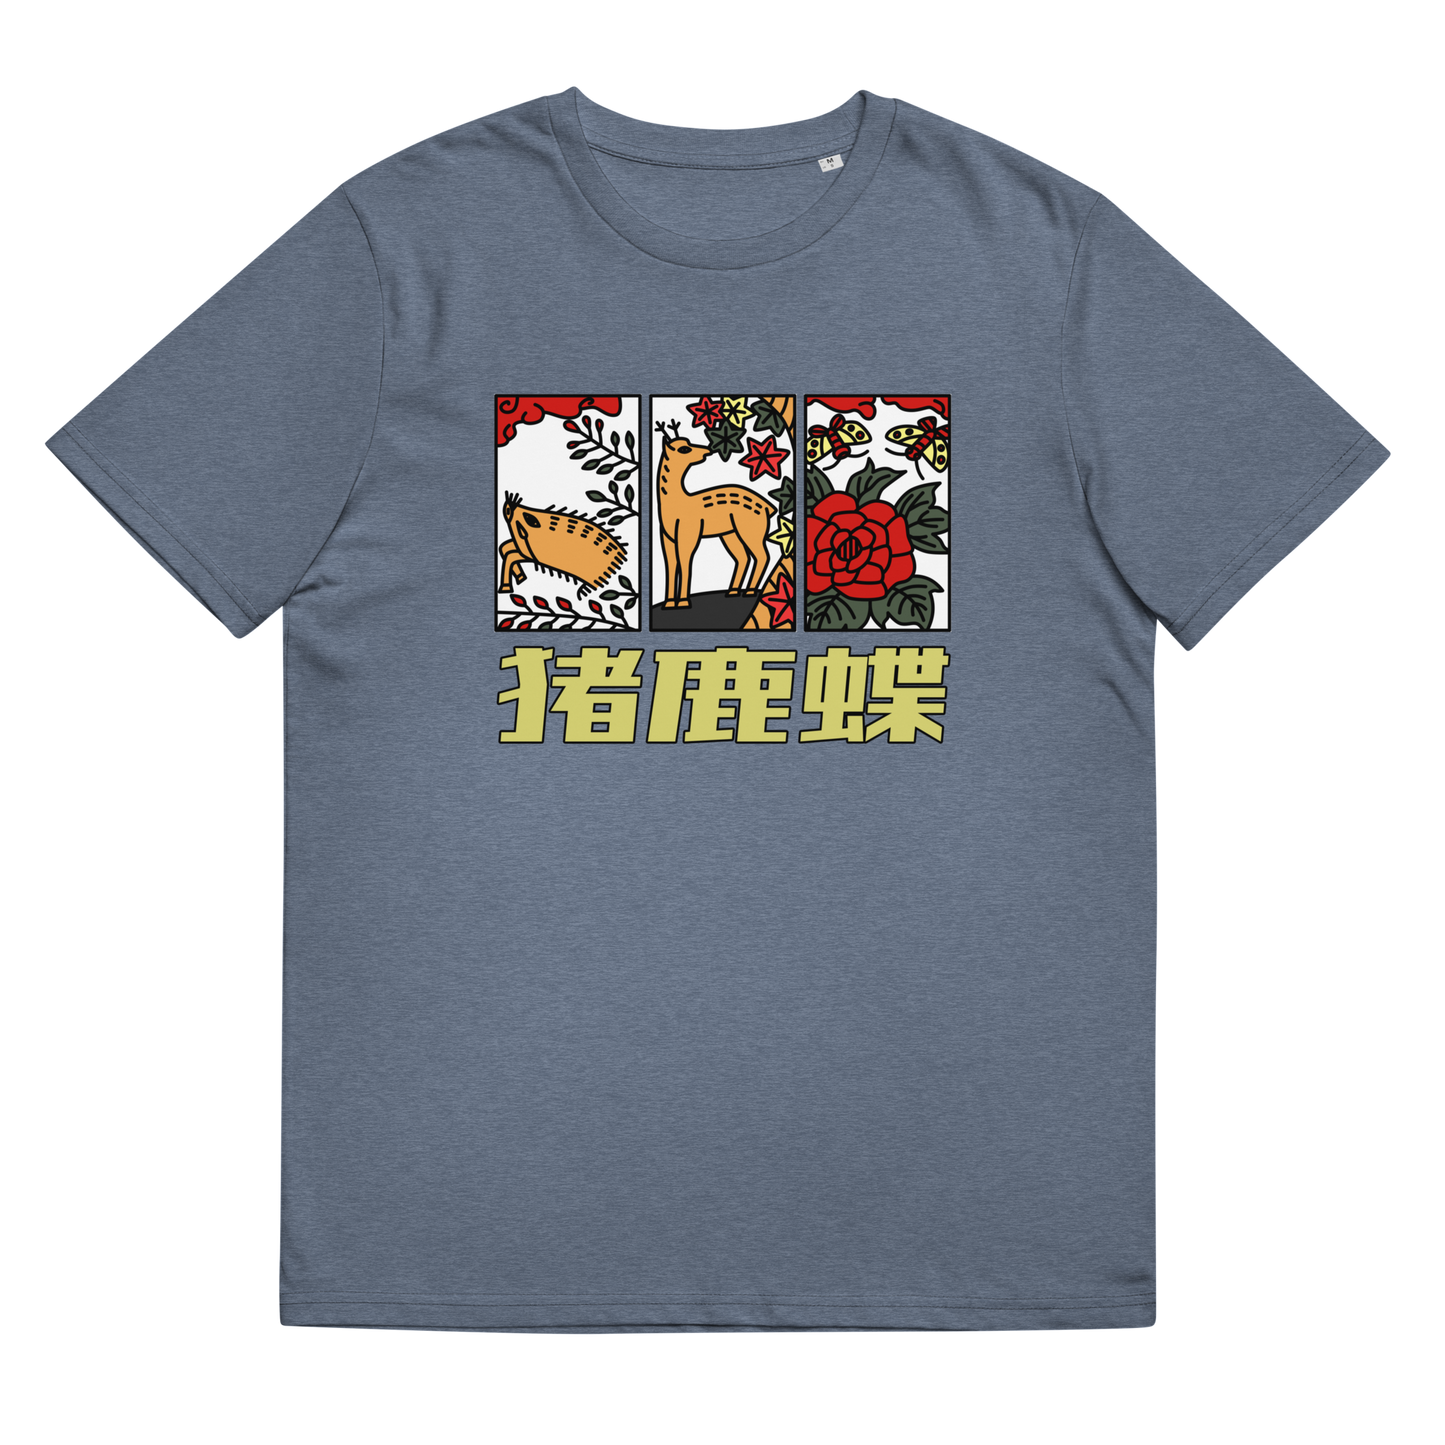 [Hanafuda] t-shirt modern domuzu kelebek (unisex)